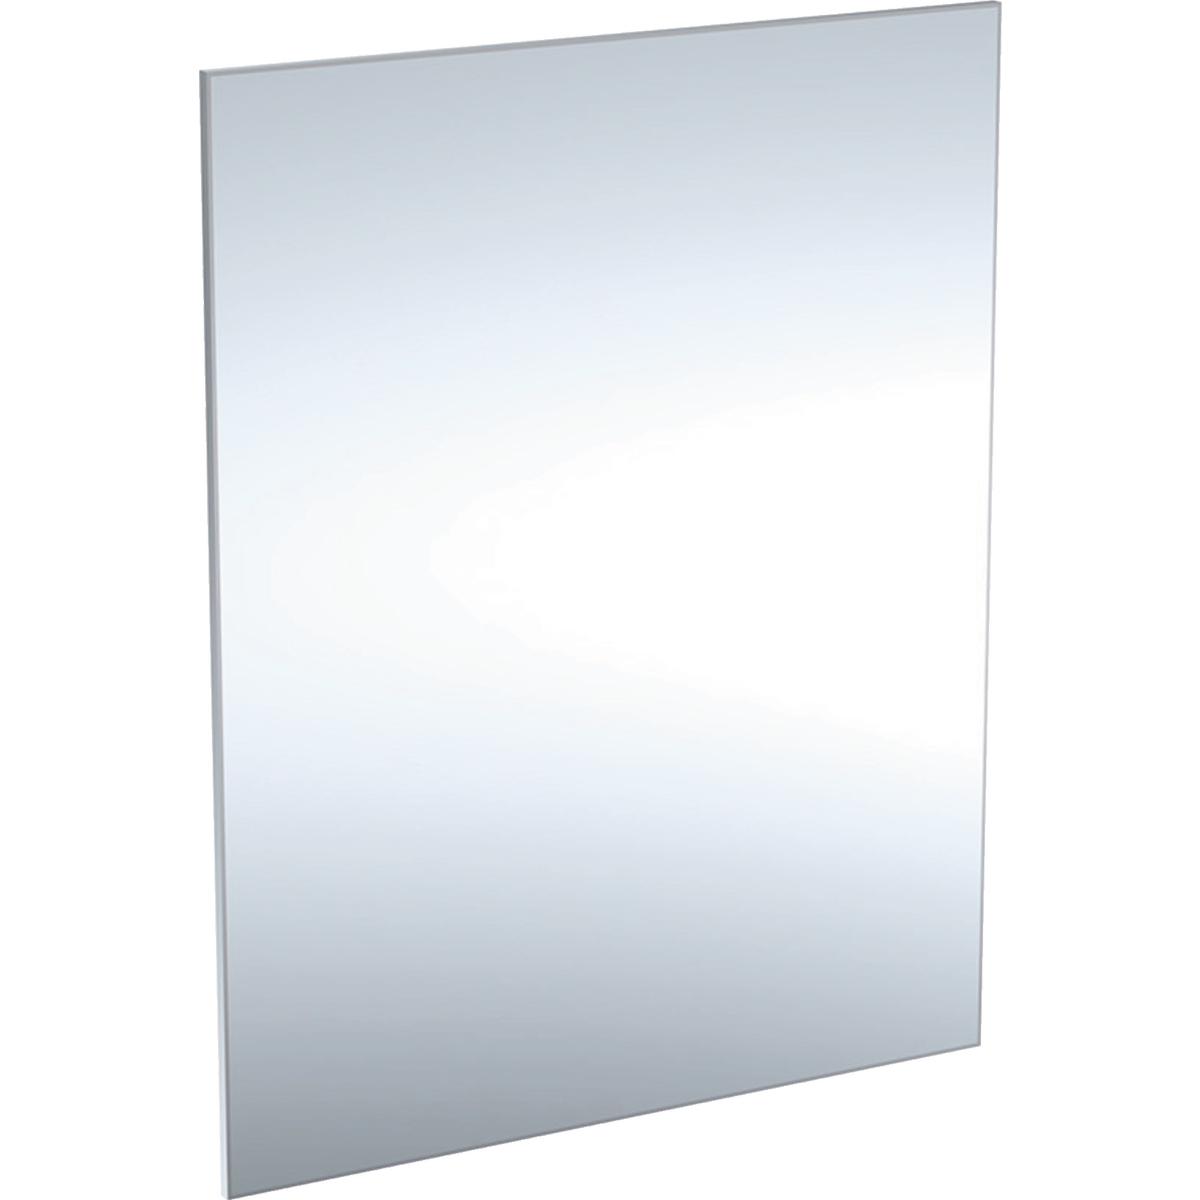 Selnova Square mirror - 600mm